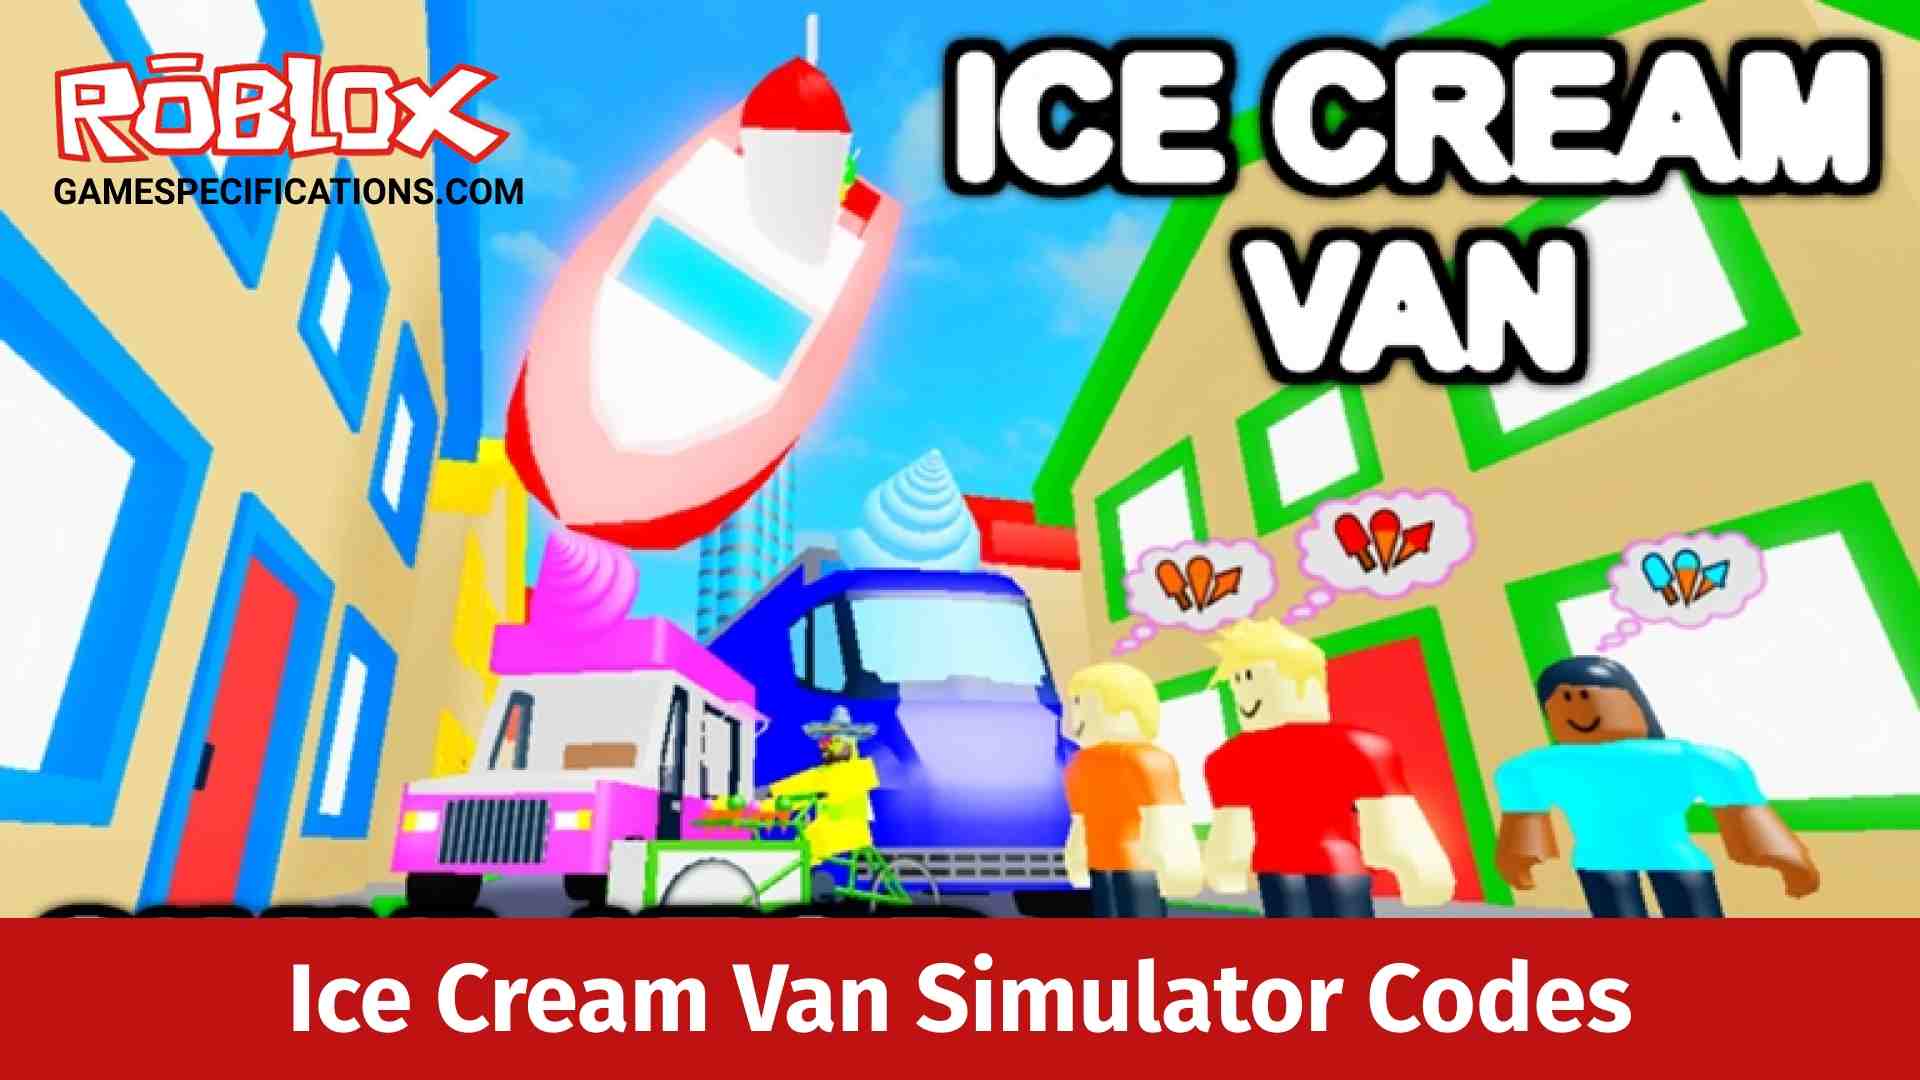 70 Working Roblox Ice Cream Van Simulator Codes 2021 Game Specifications - roblox skyhigh music